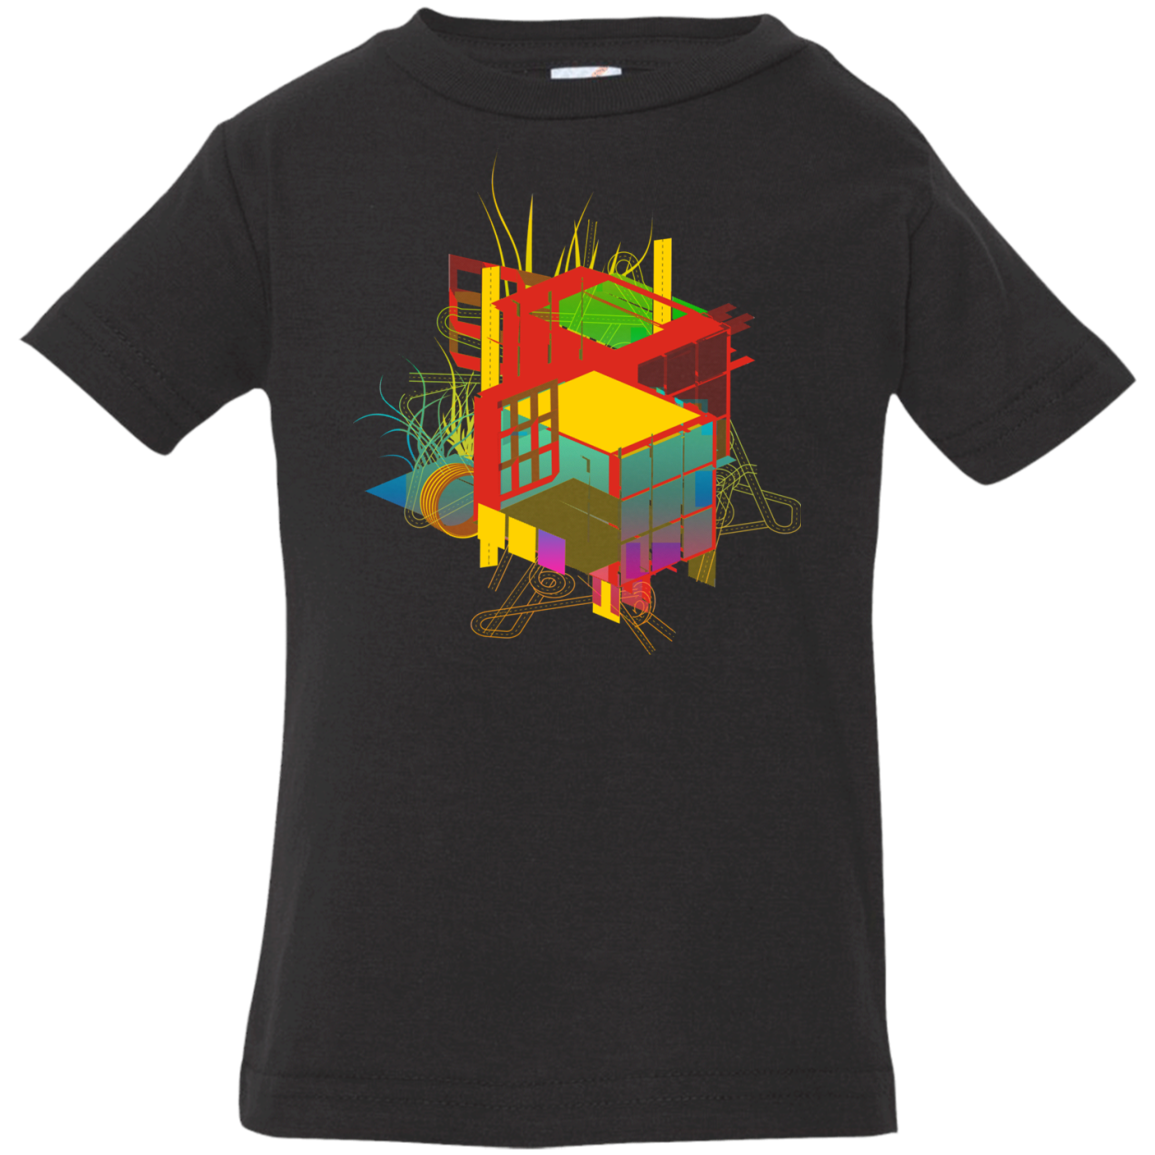 Rubik's Building Infant Premium T-Shirt